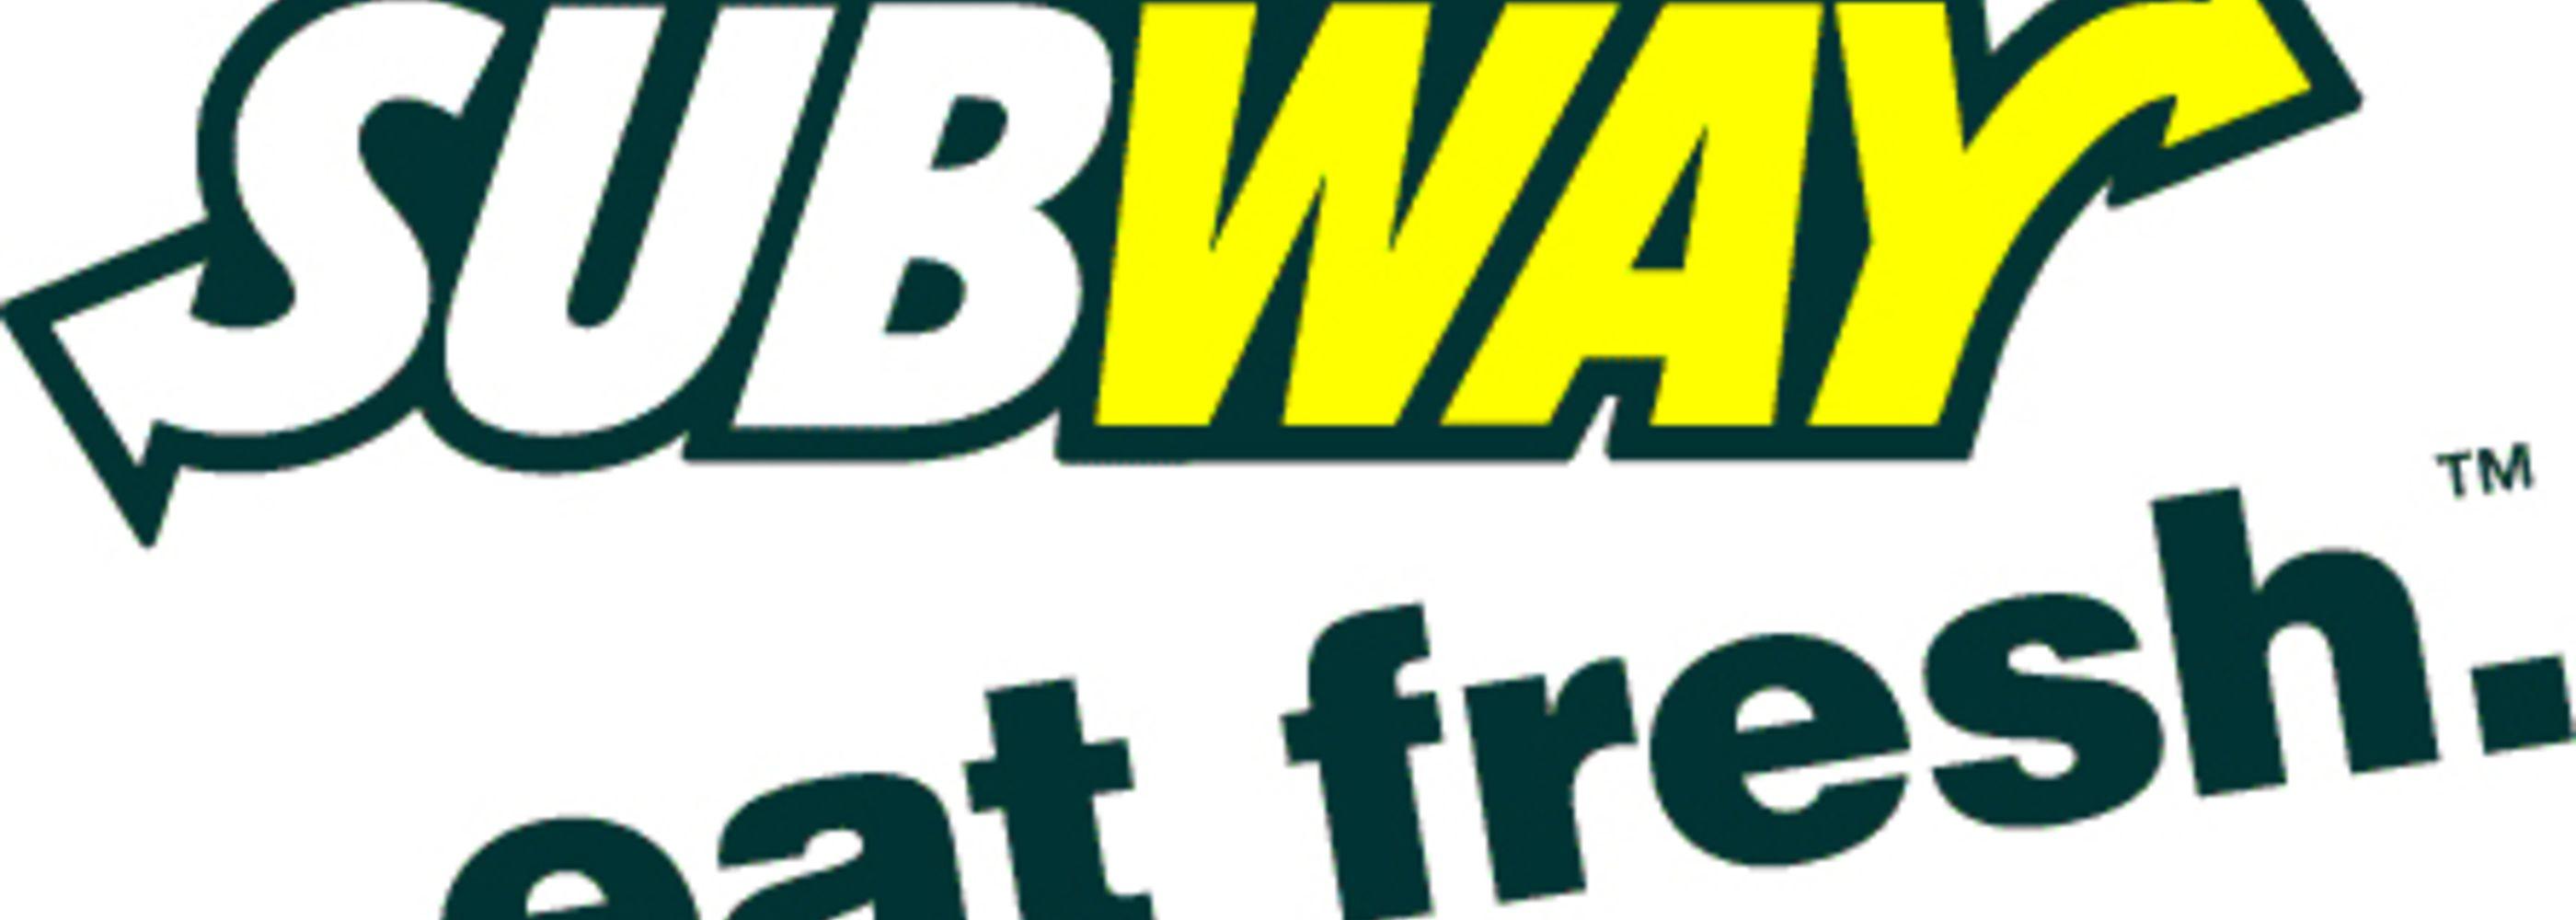 Subway 2018 Logo - Widgety